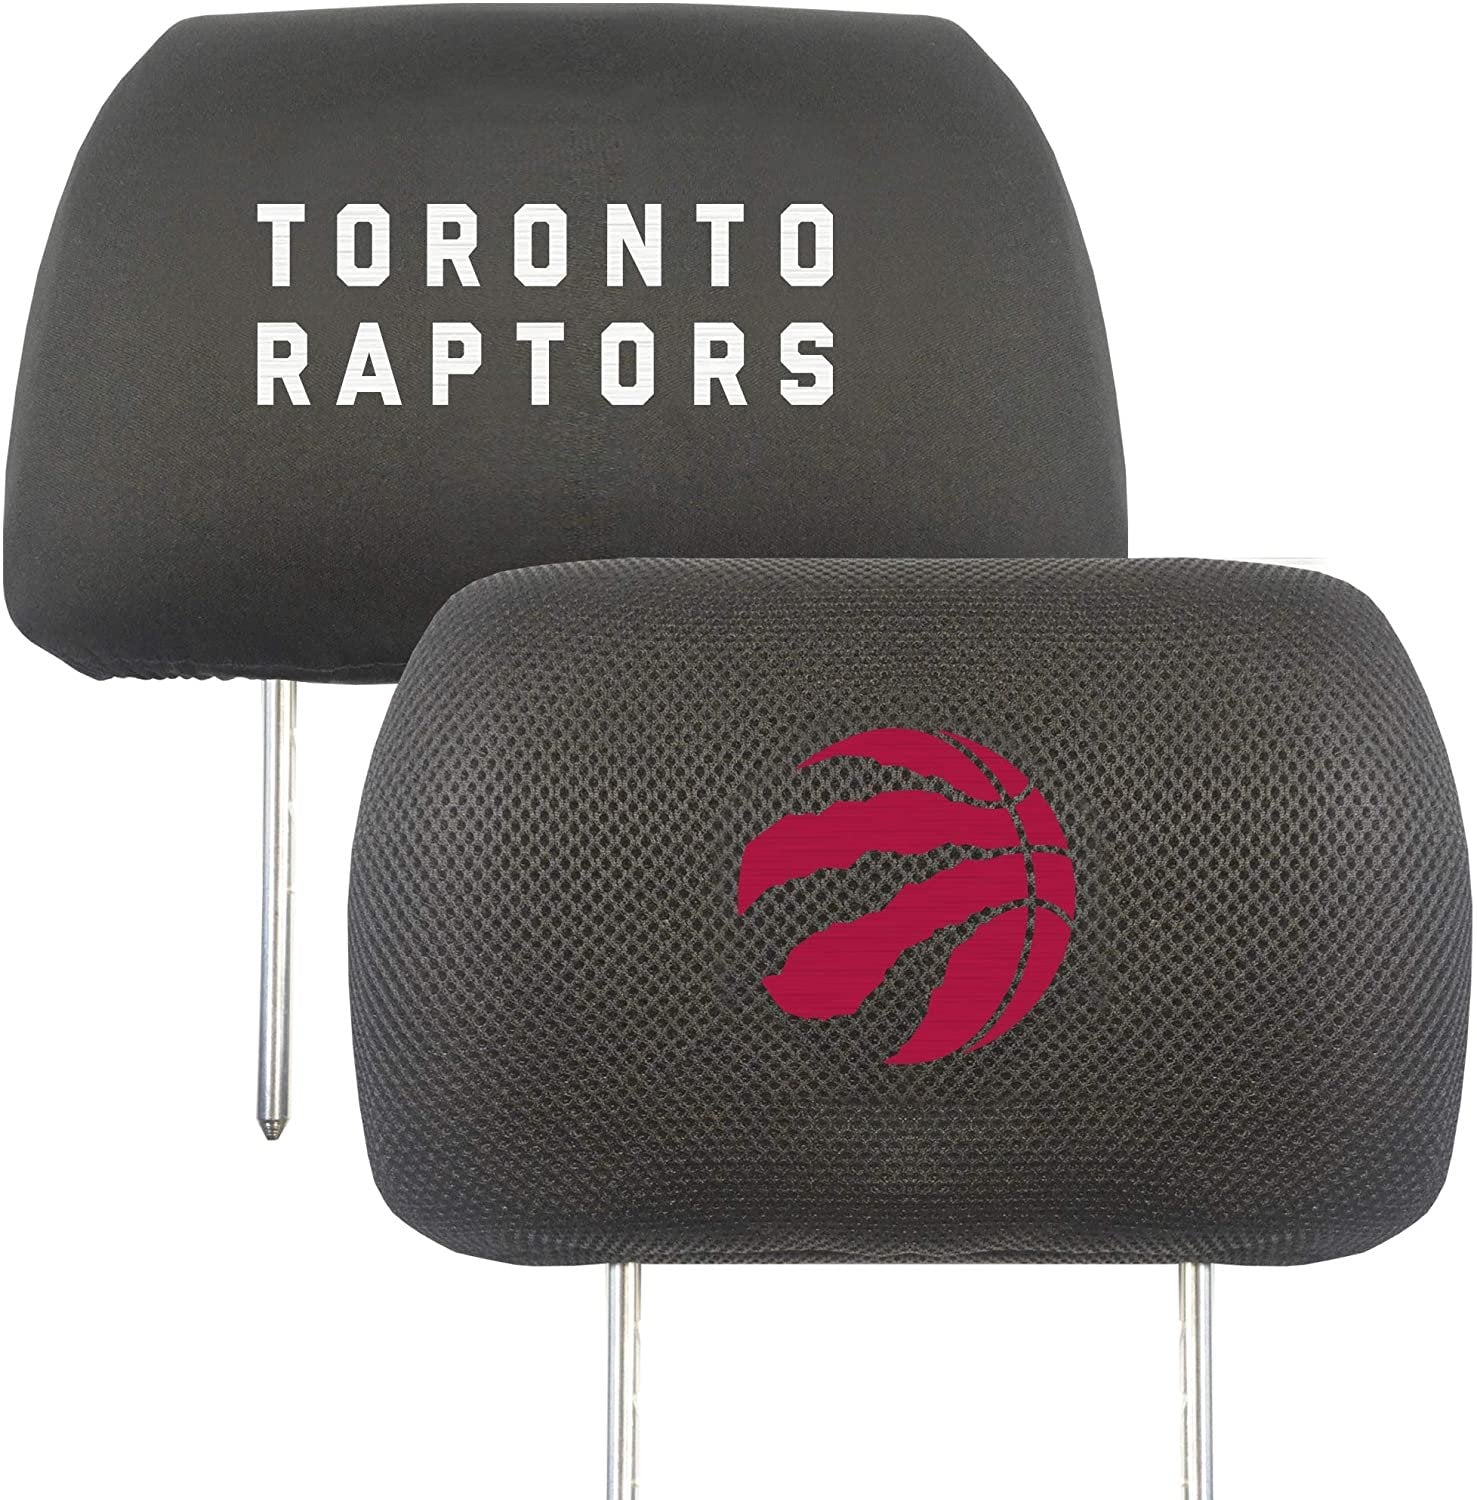 Toronto Raptors Pair of Premium Auto Head Rest Covers, Embroidered, Black Elastic, 14x10 Inch